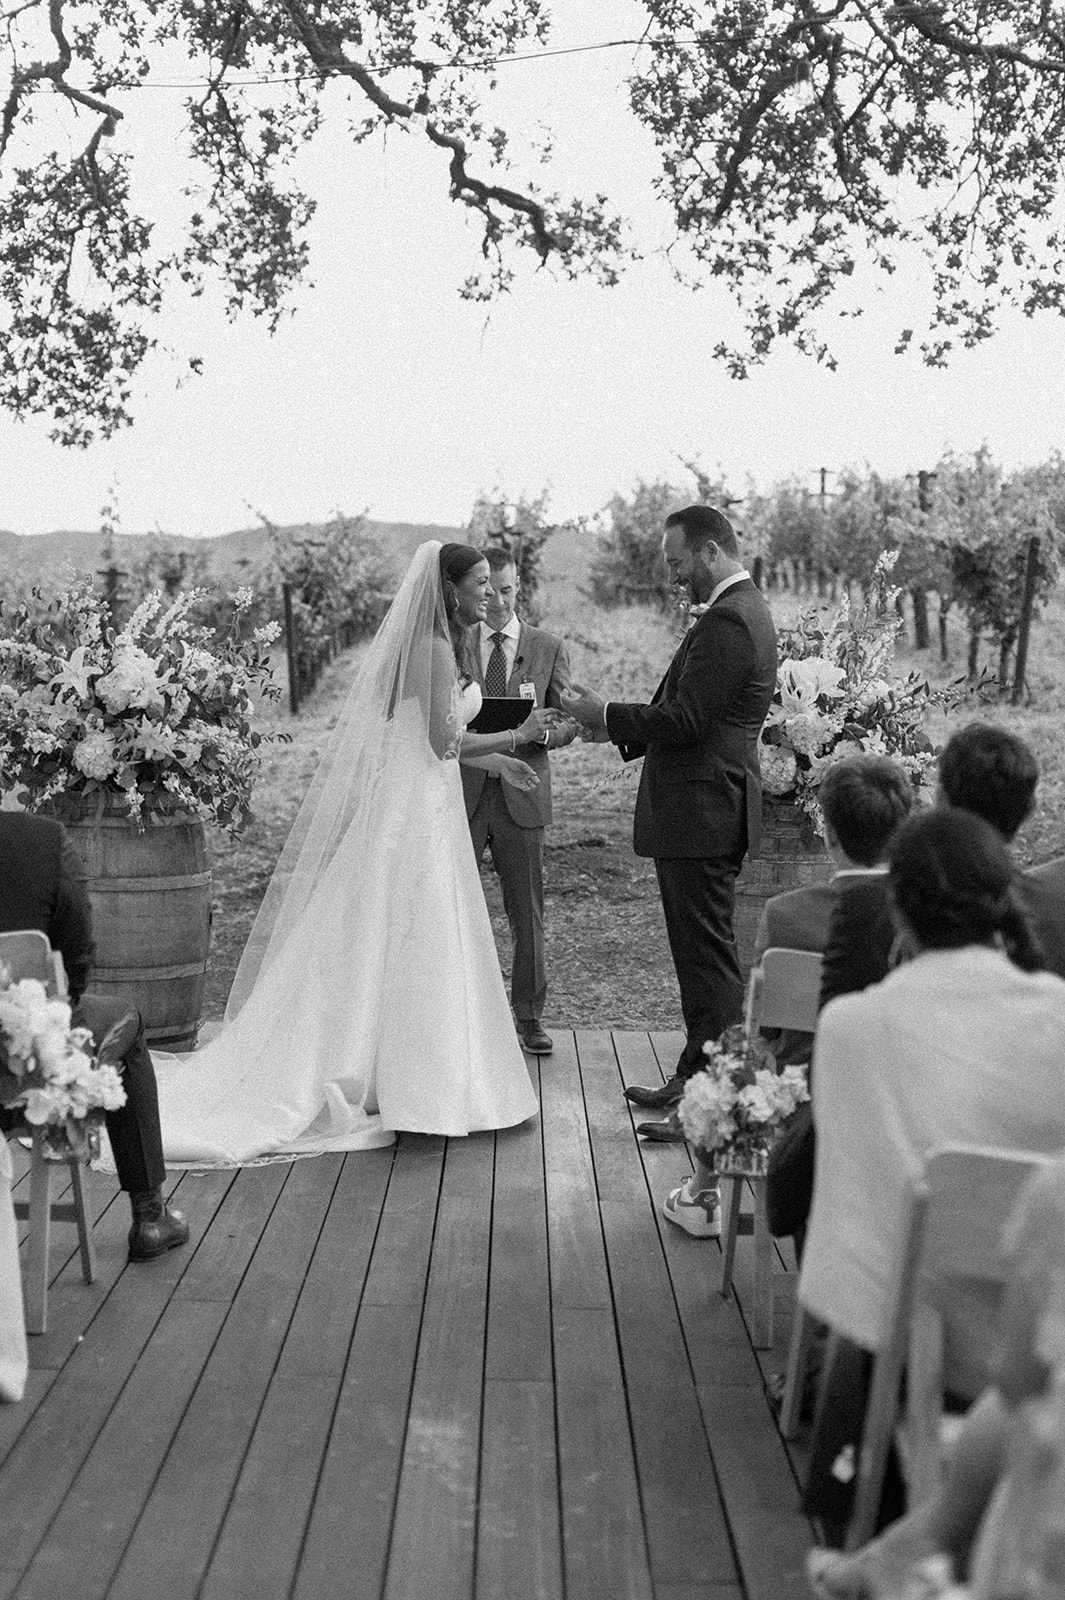 Sydney Jai Photography - Napa Valley Wedding Photographer, wedding ceremony, bride and groom photos, winery wedding venue, vineyard wedding venue